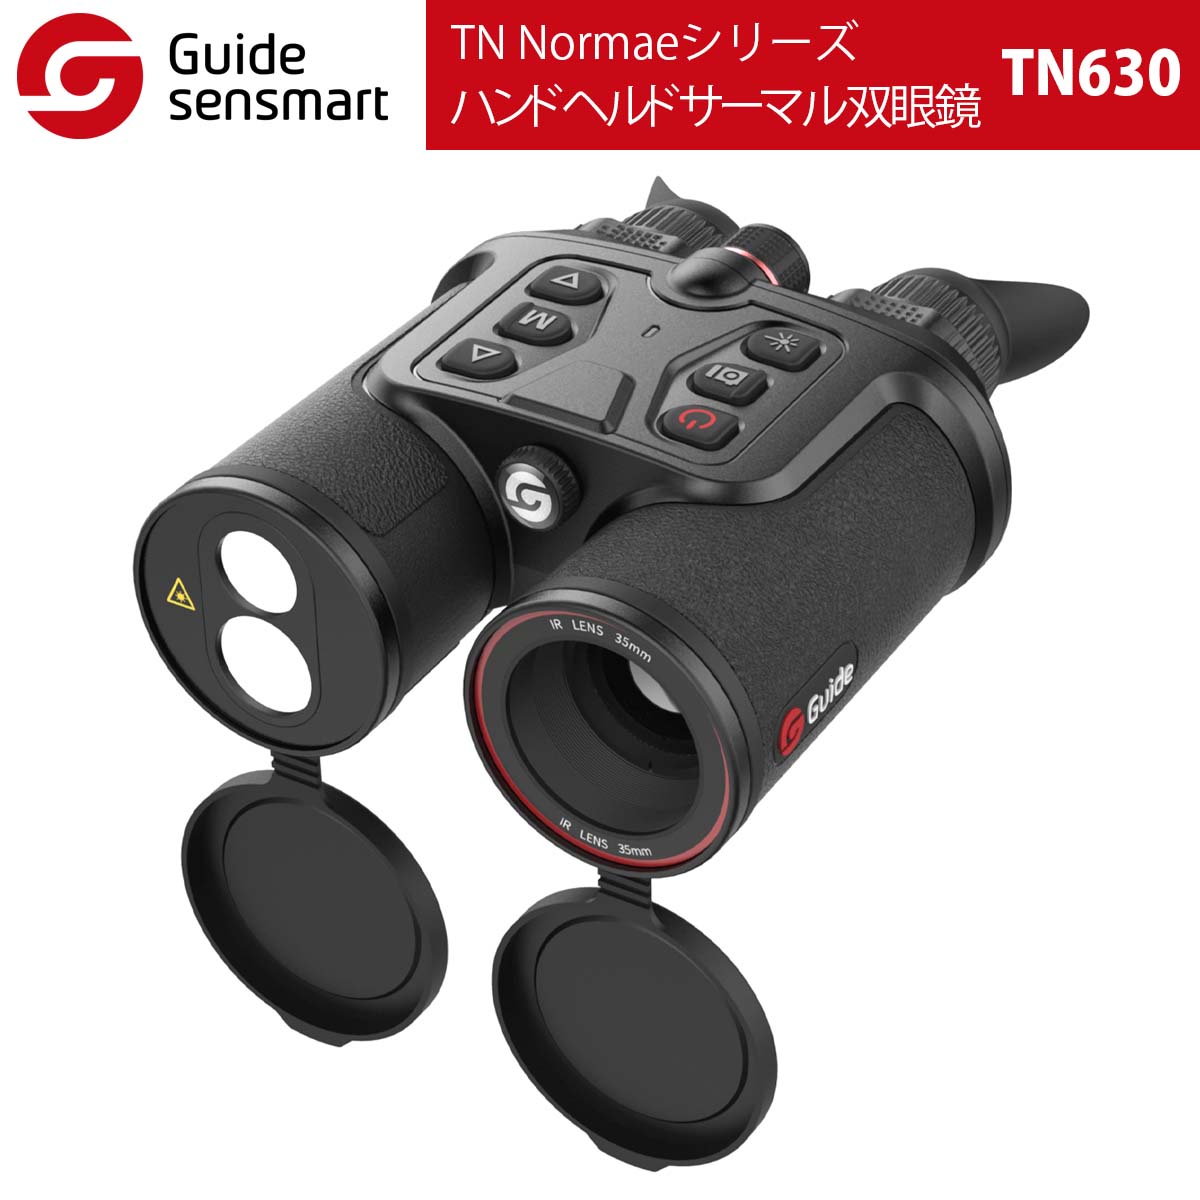 Guide sensmart ハンドヘルドサーマル双眼鏡 TN630（TN Normaeシリーズ）高感度VOx非冷却IR検出器 高解像度ディスプレイ 簡単観察 WIFI接続 PIPモード フルカラーOLED